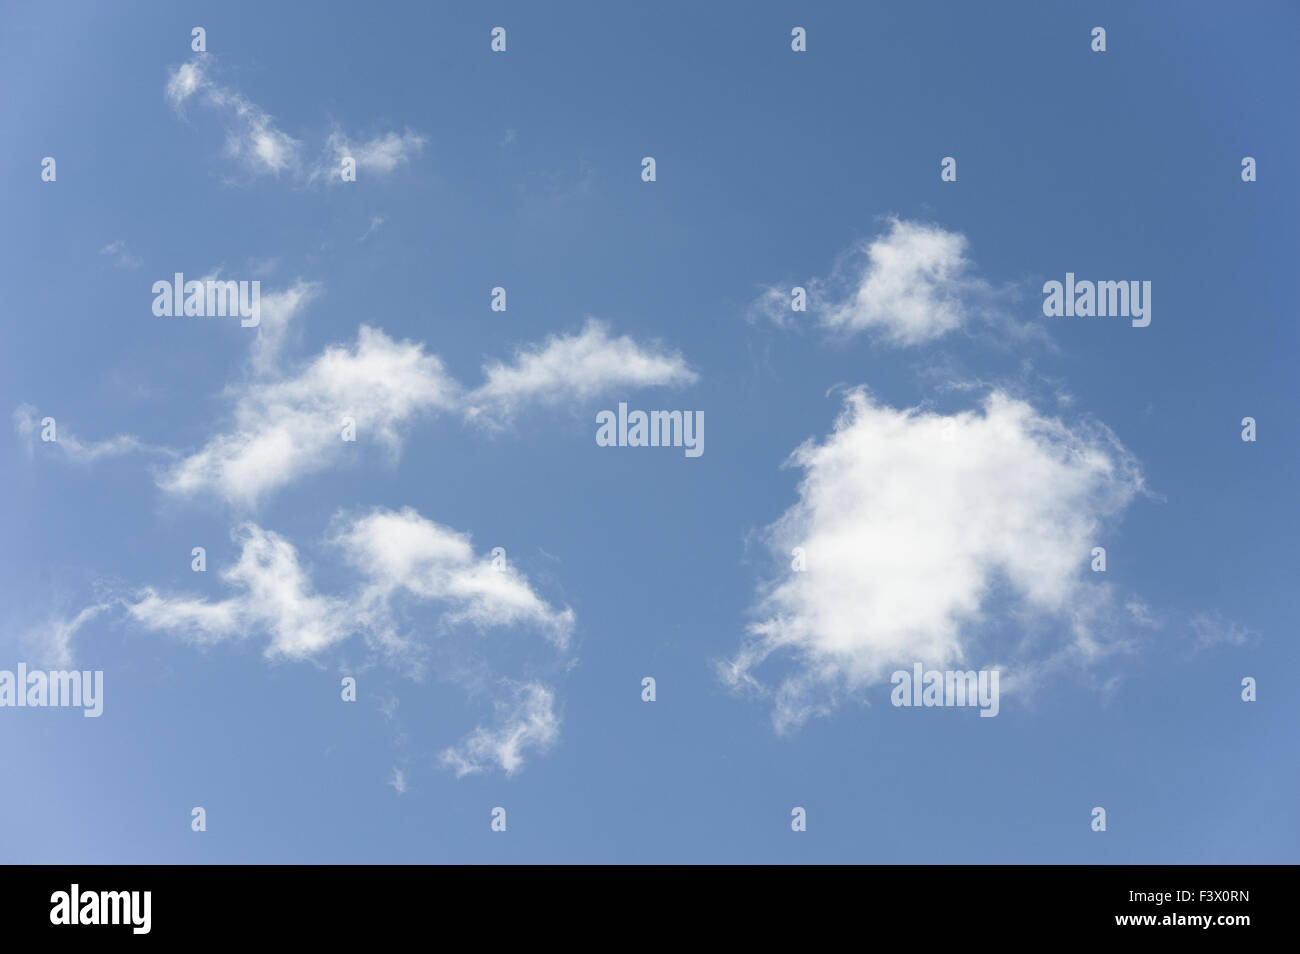 Cloud image Stock Photo